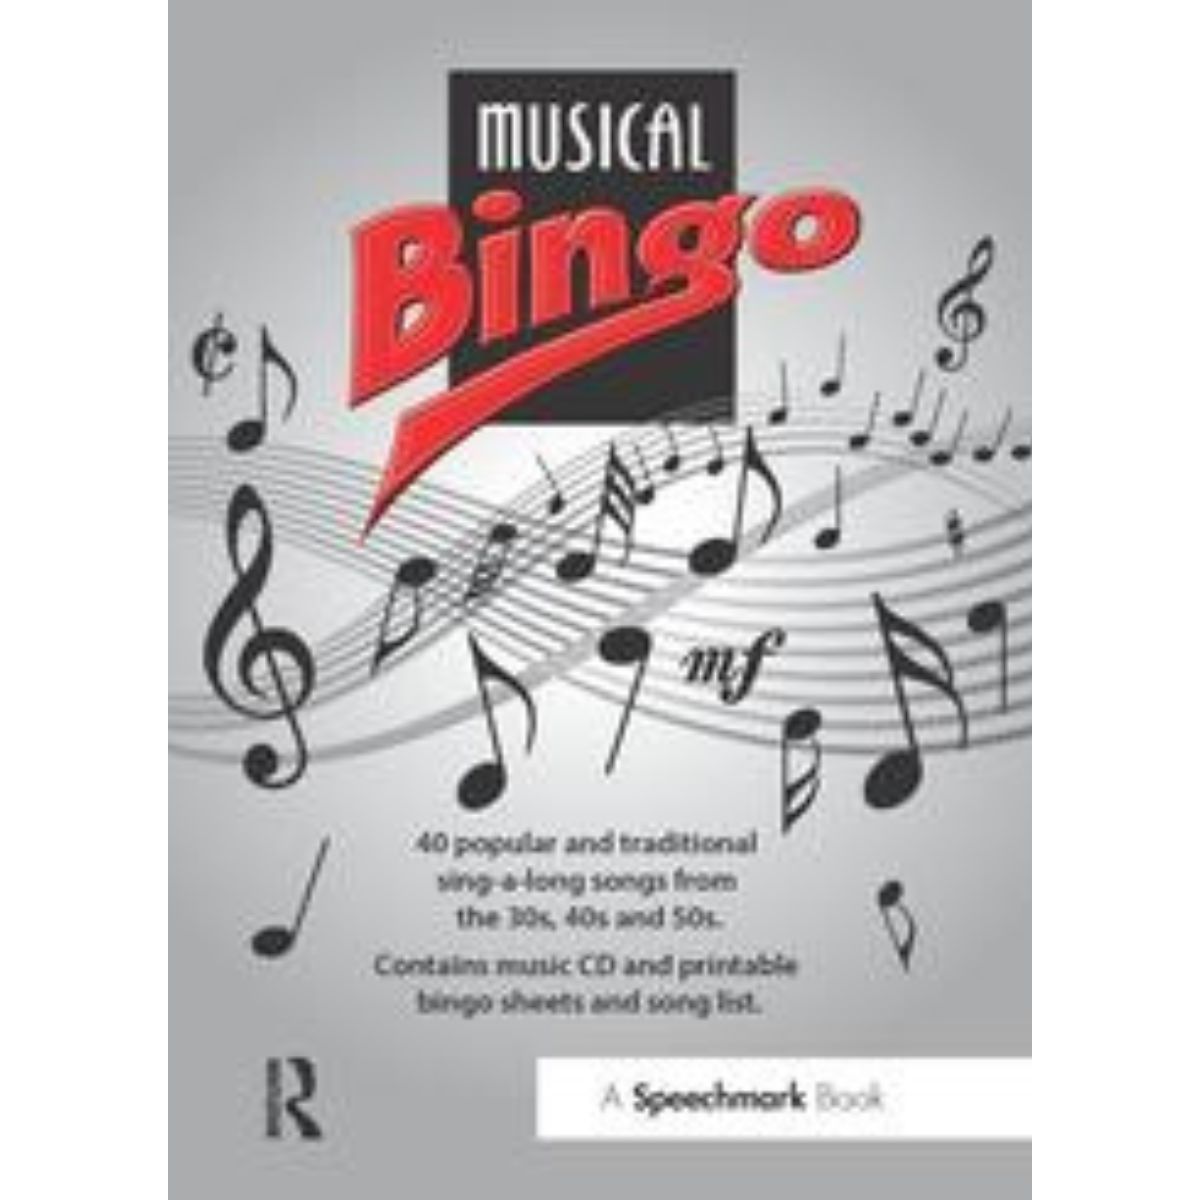 Musical Bingo CD